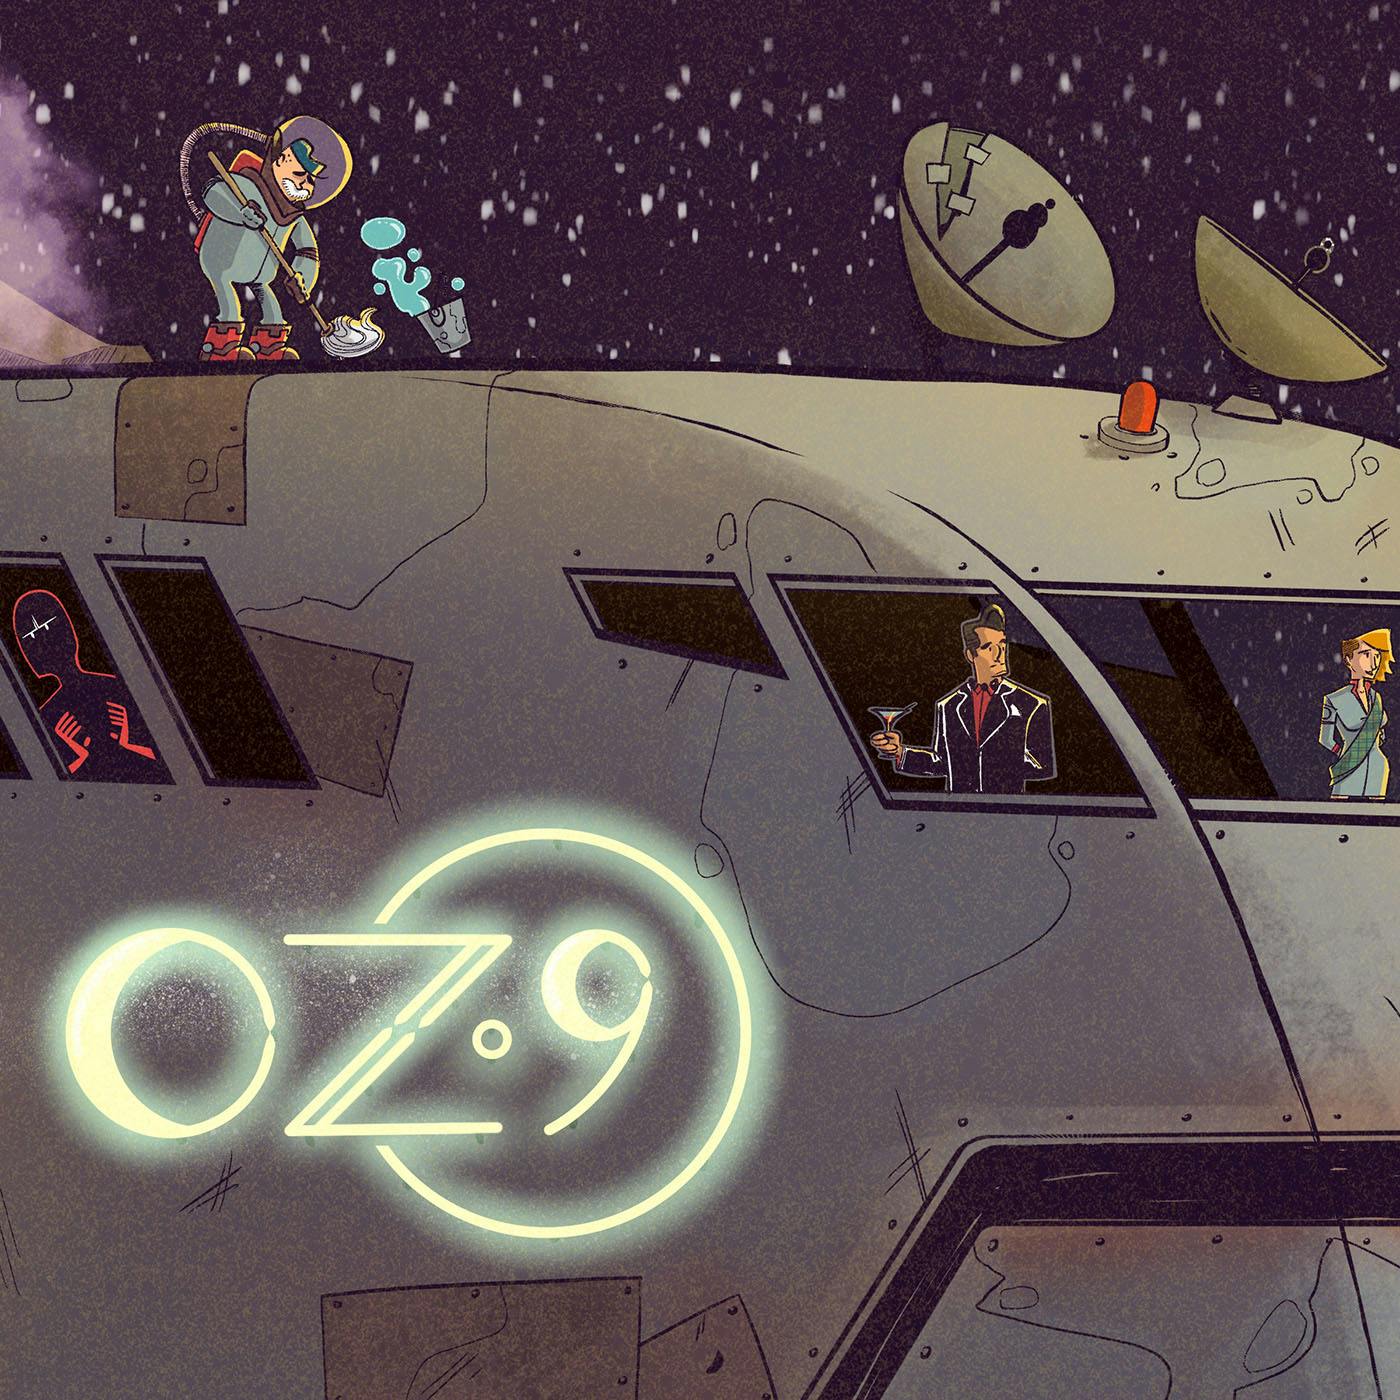 "Oz 9" Podcast